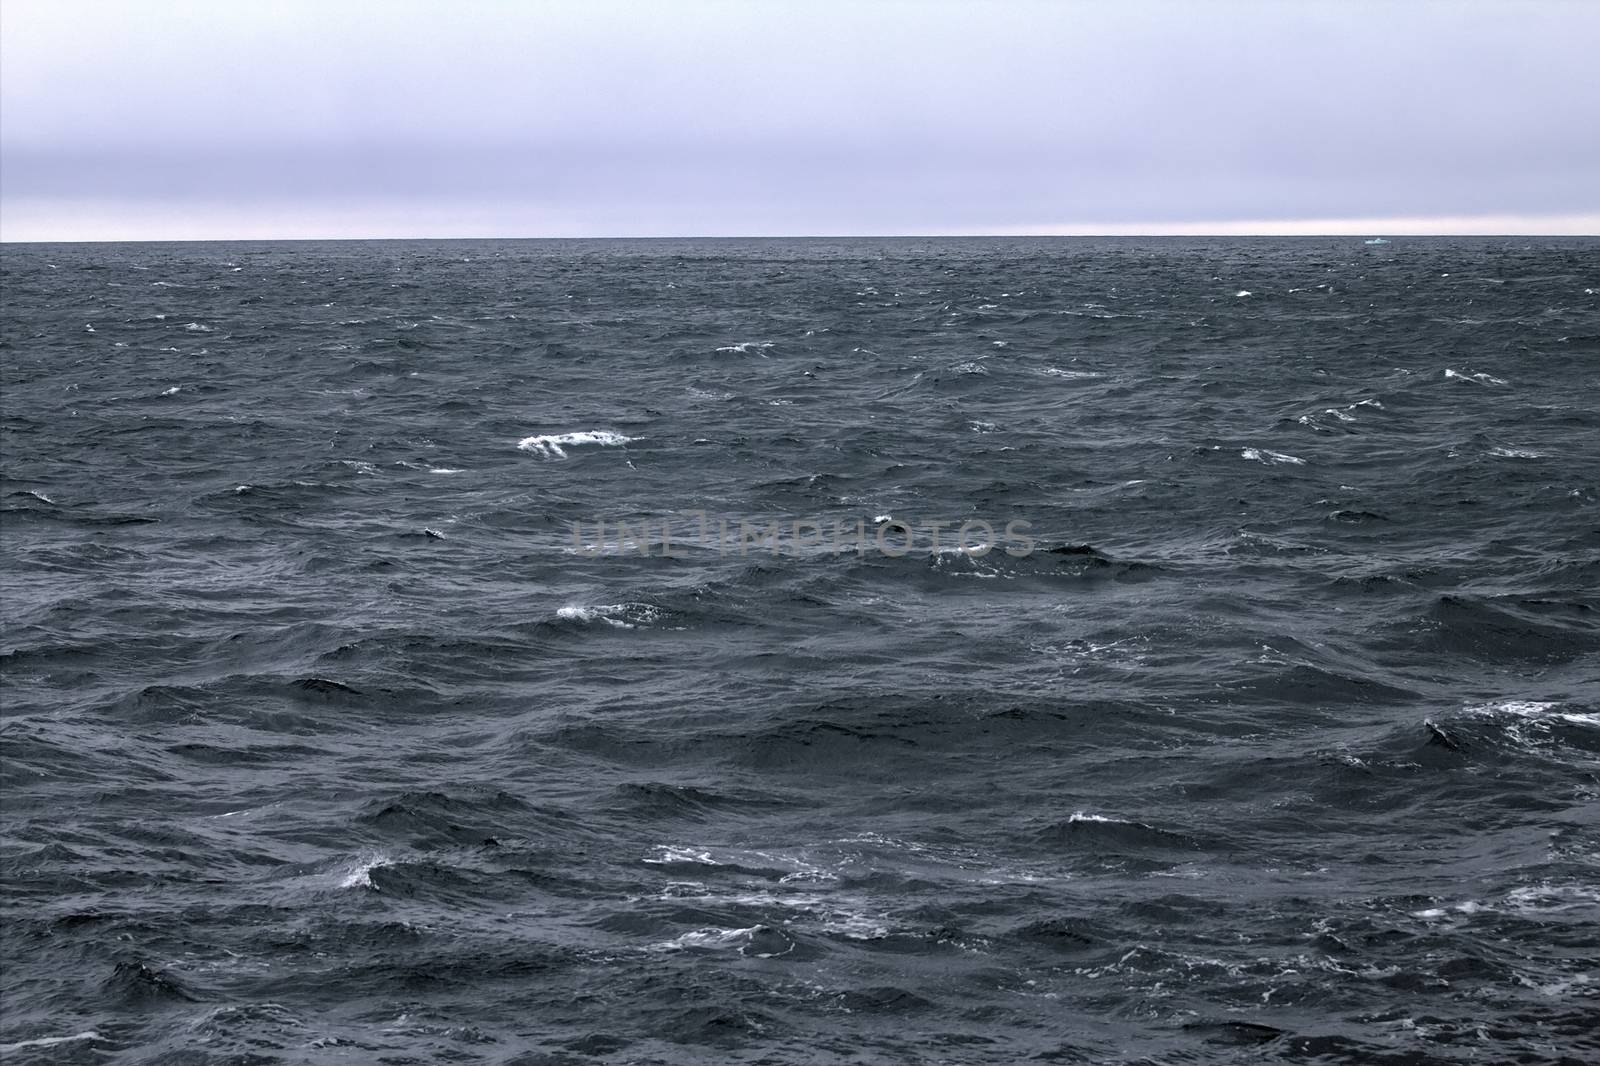 Kara sea near the island of Novaya Zemlya by max51288